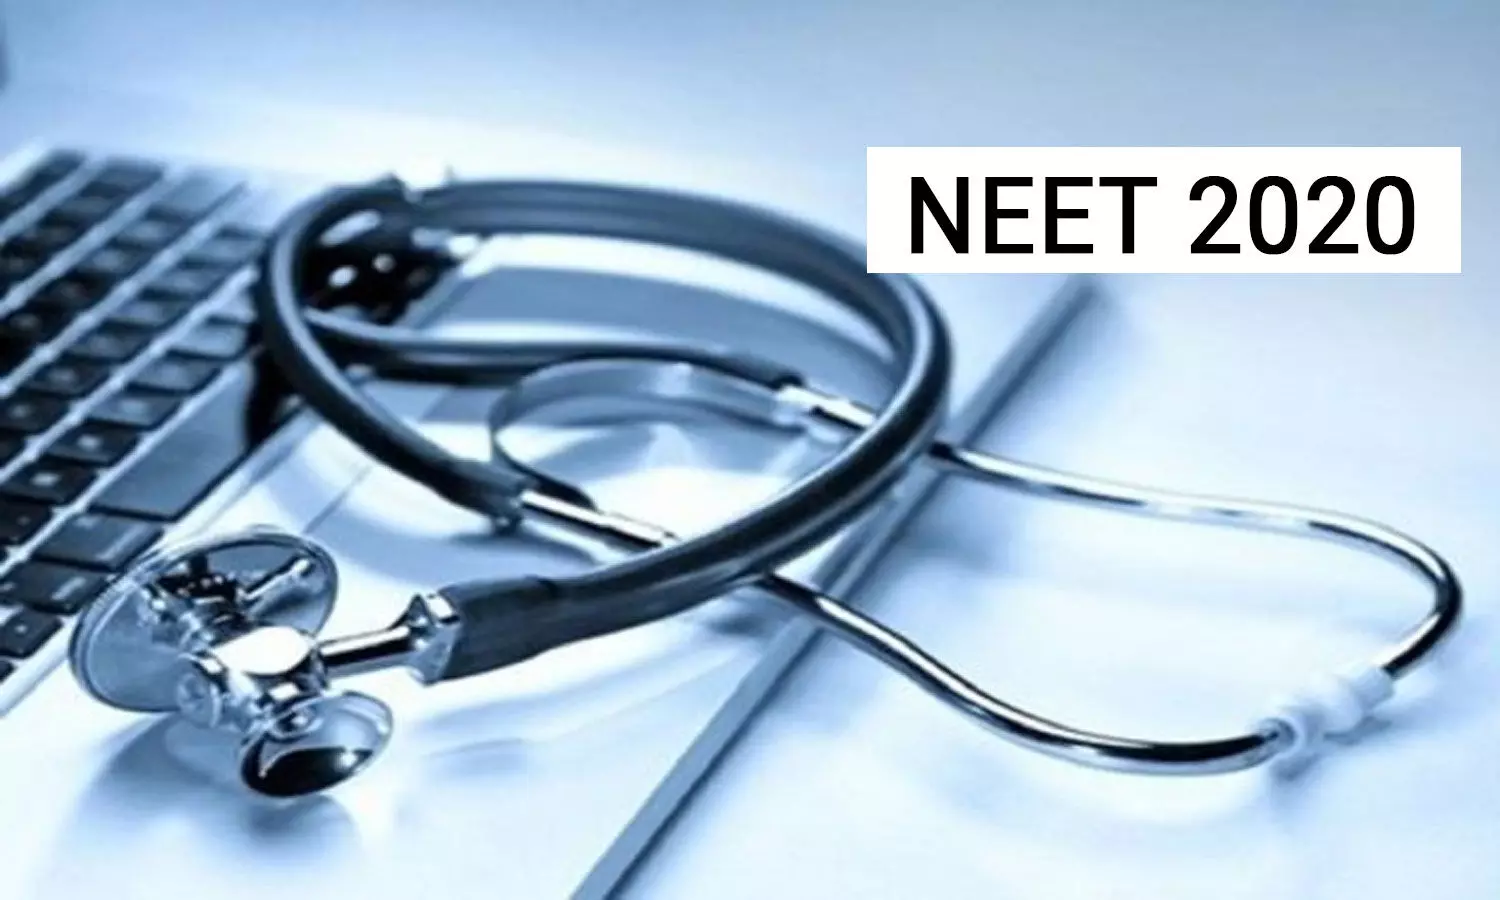 4000 NEET aspirants move Supreme Court demanding centres abroad or postponement of NEET 2020